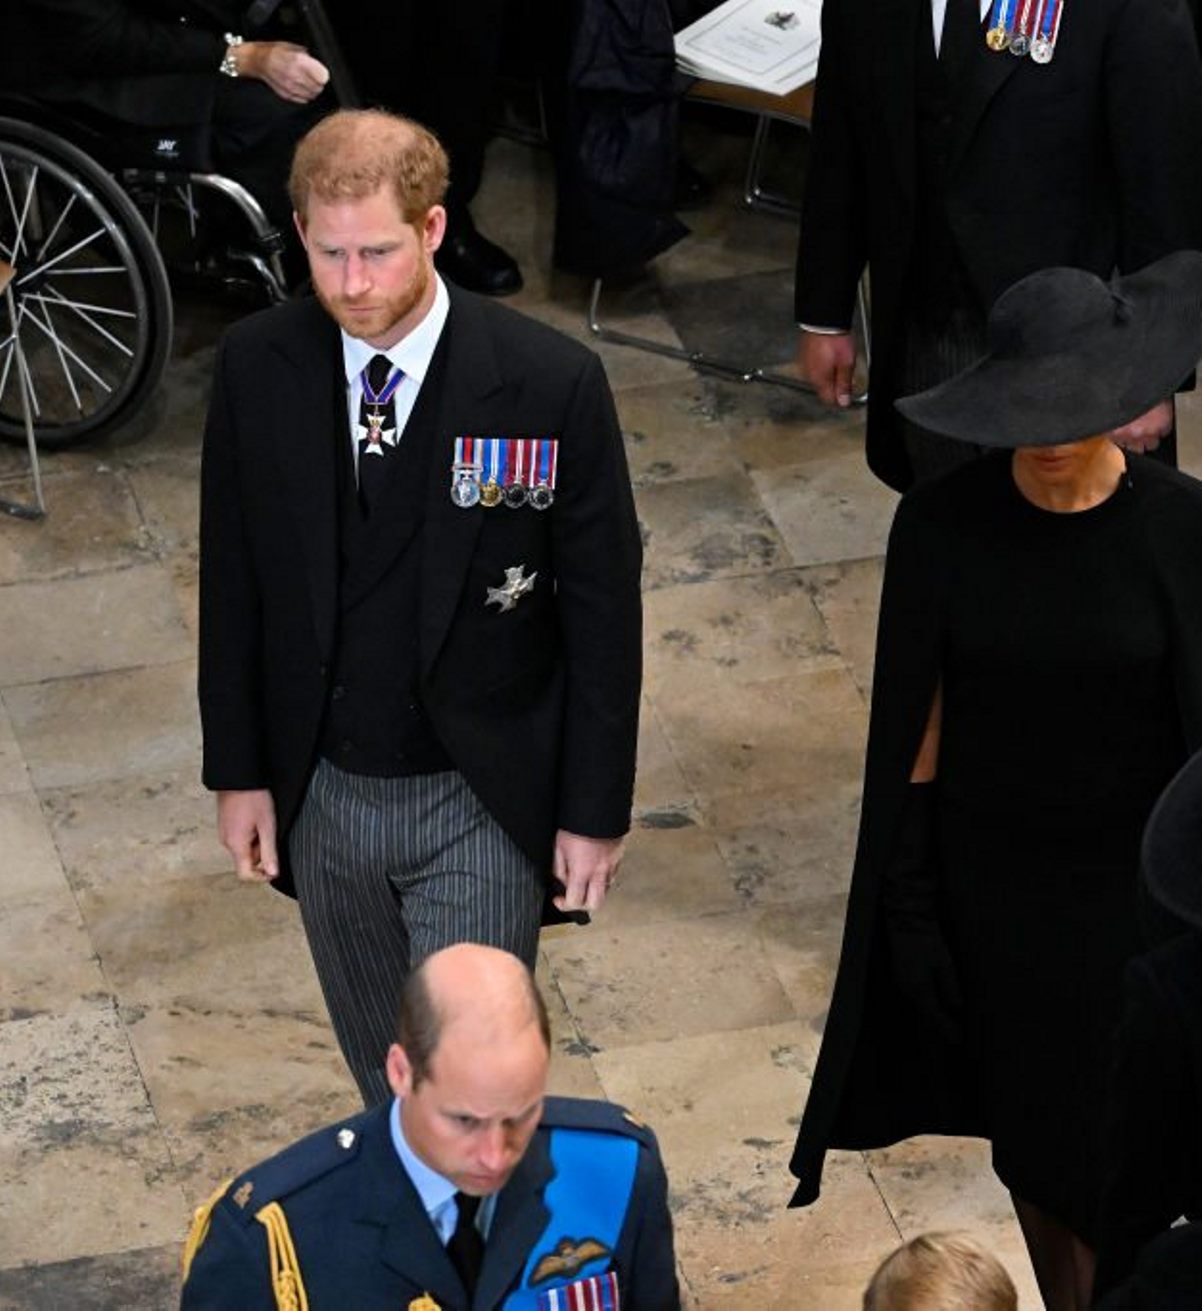 Regina Elisabetta spilla Richmond nella tomba gesto per Harry